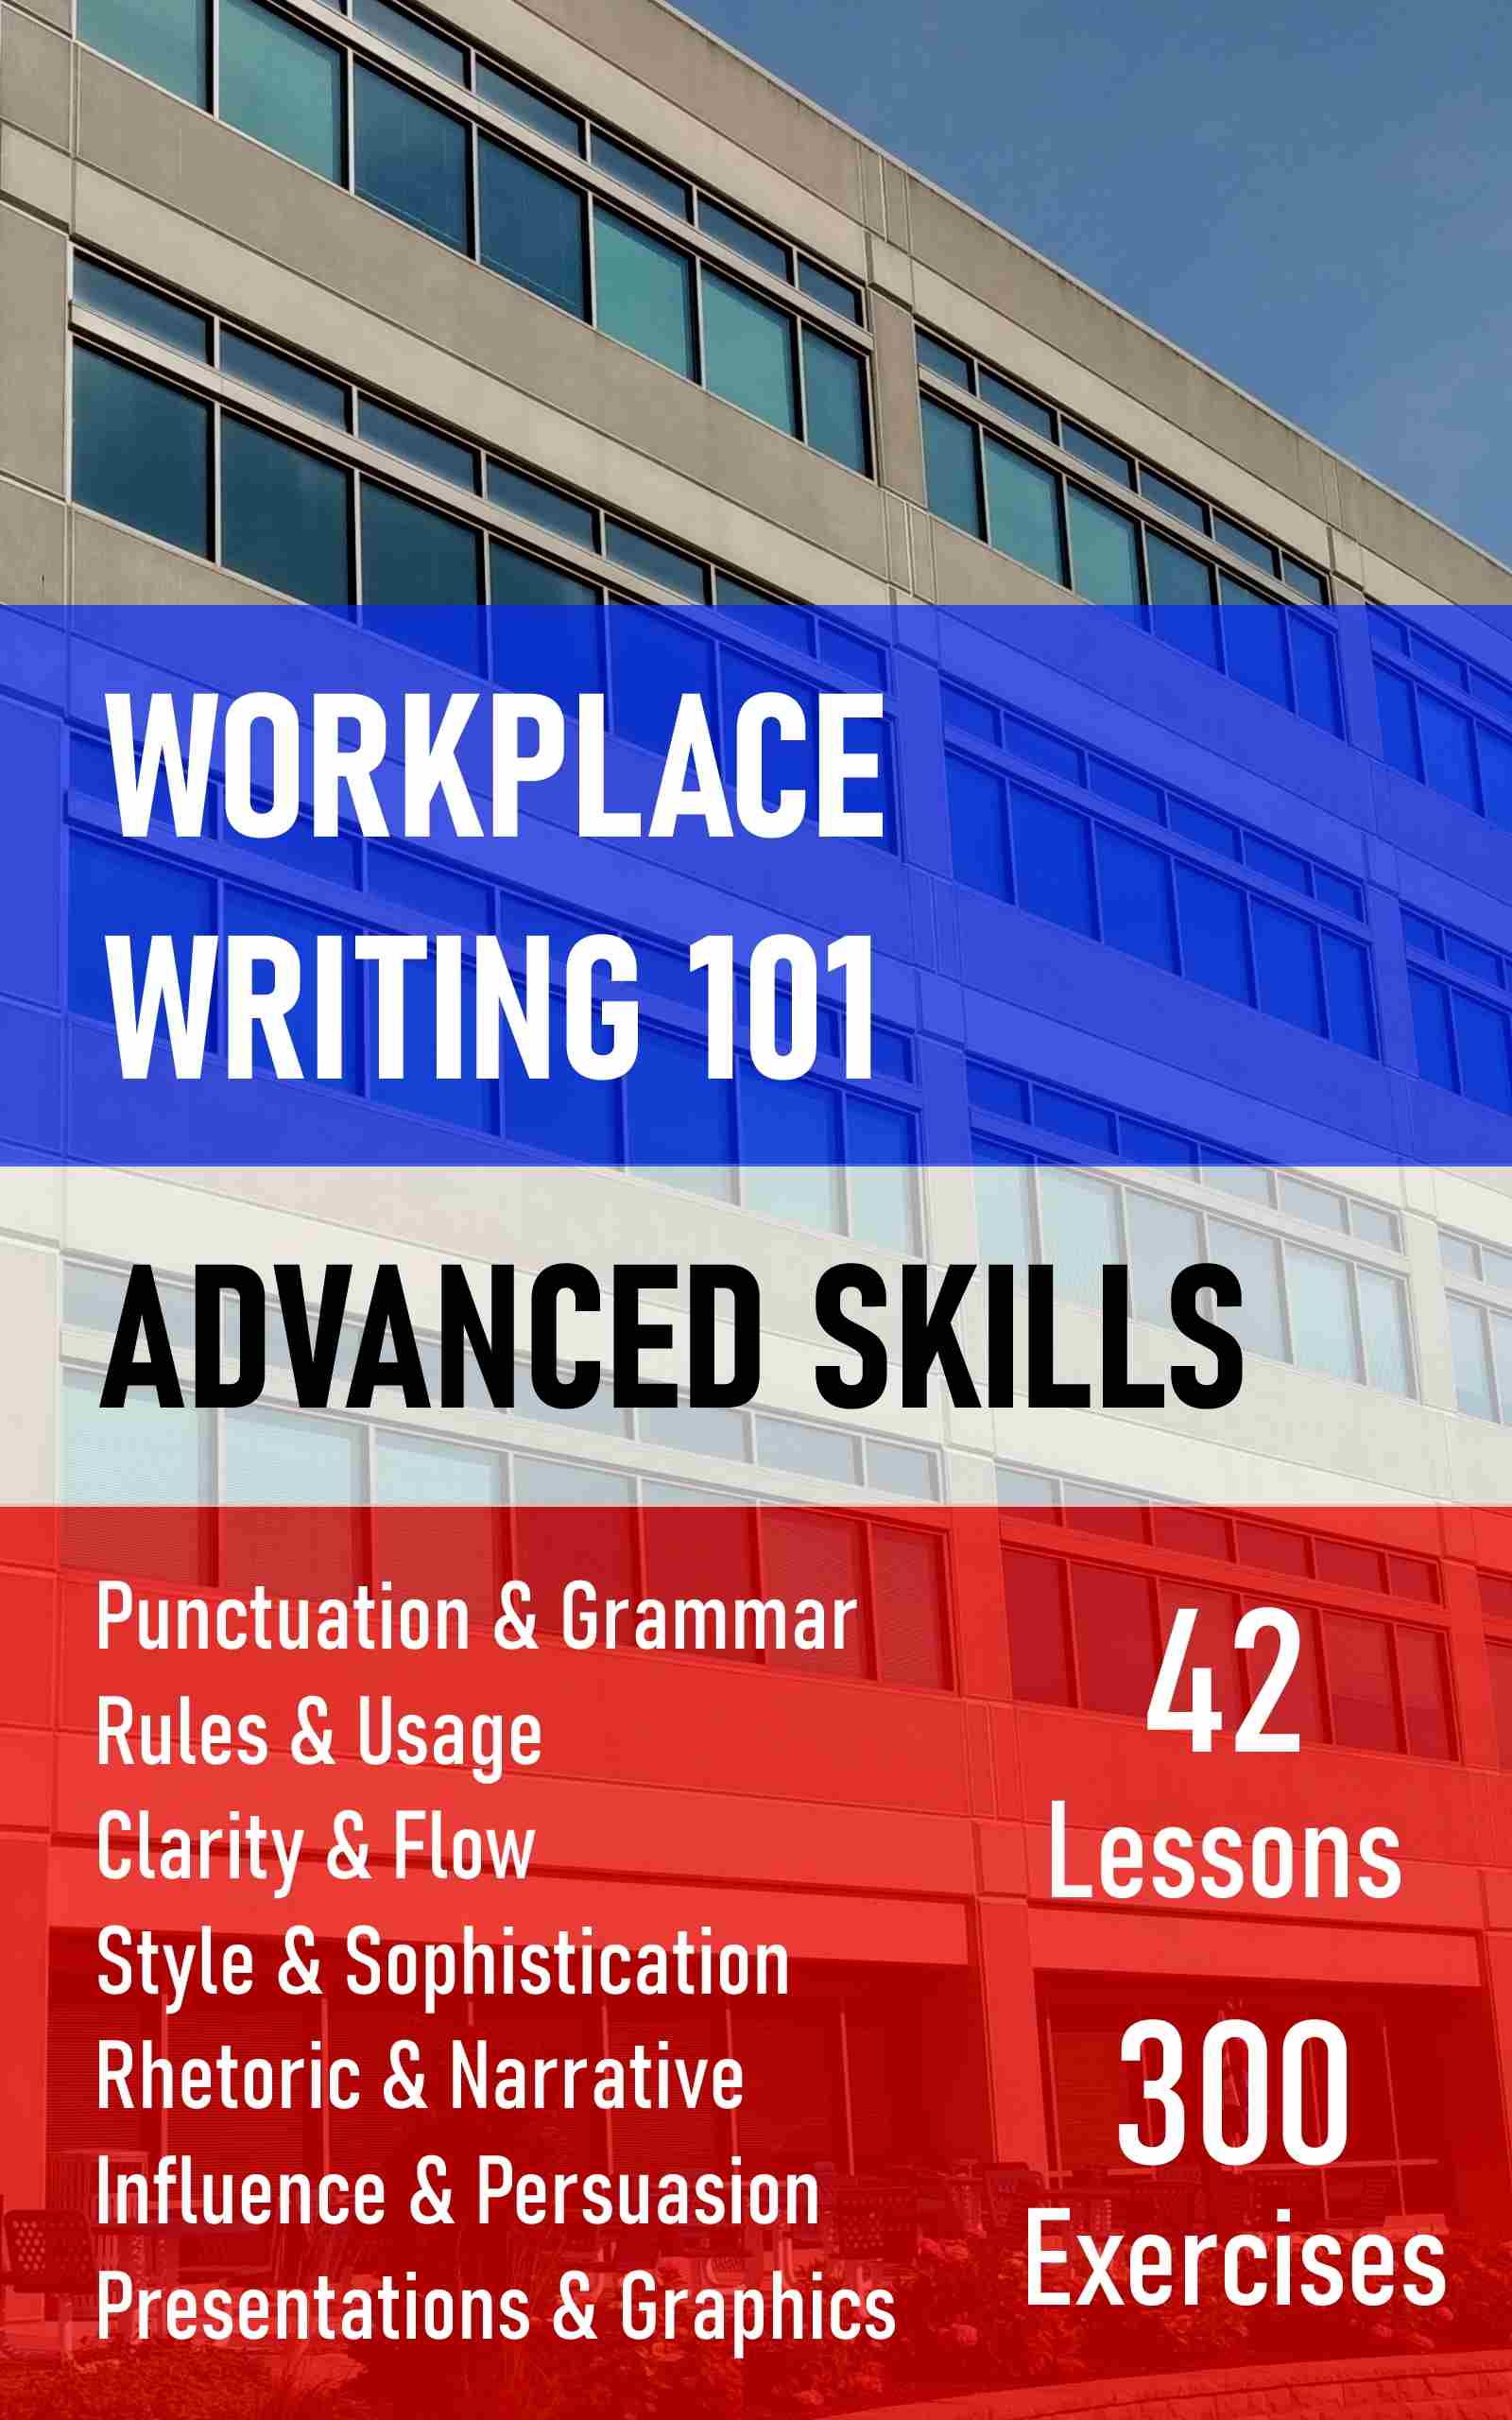 Workplace Writing 101 - Advanced Skills